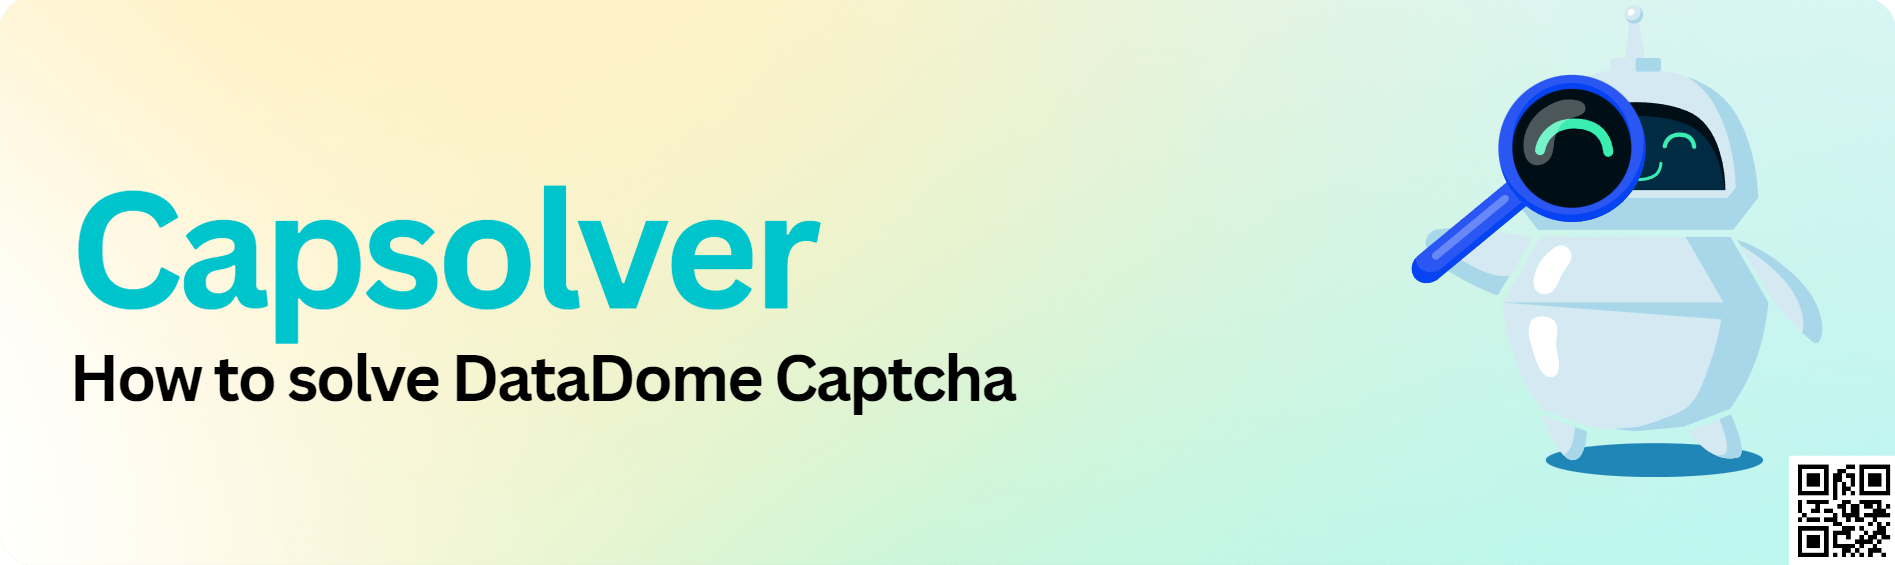 How to solve DataDome Captcha